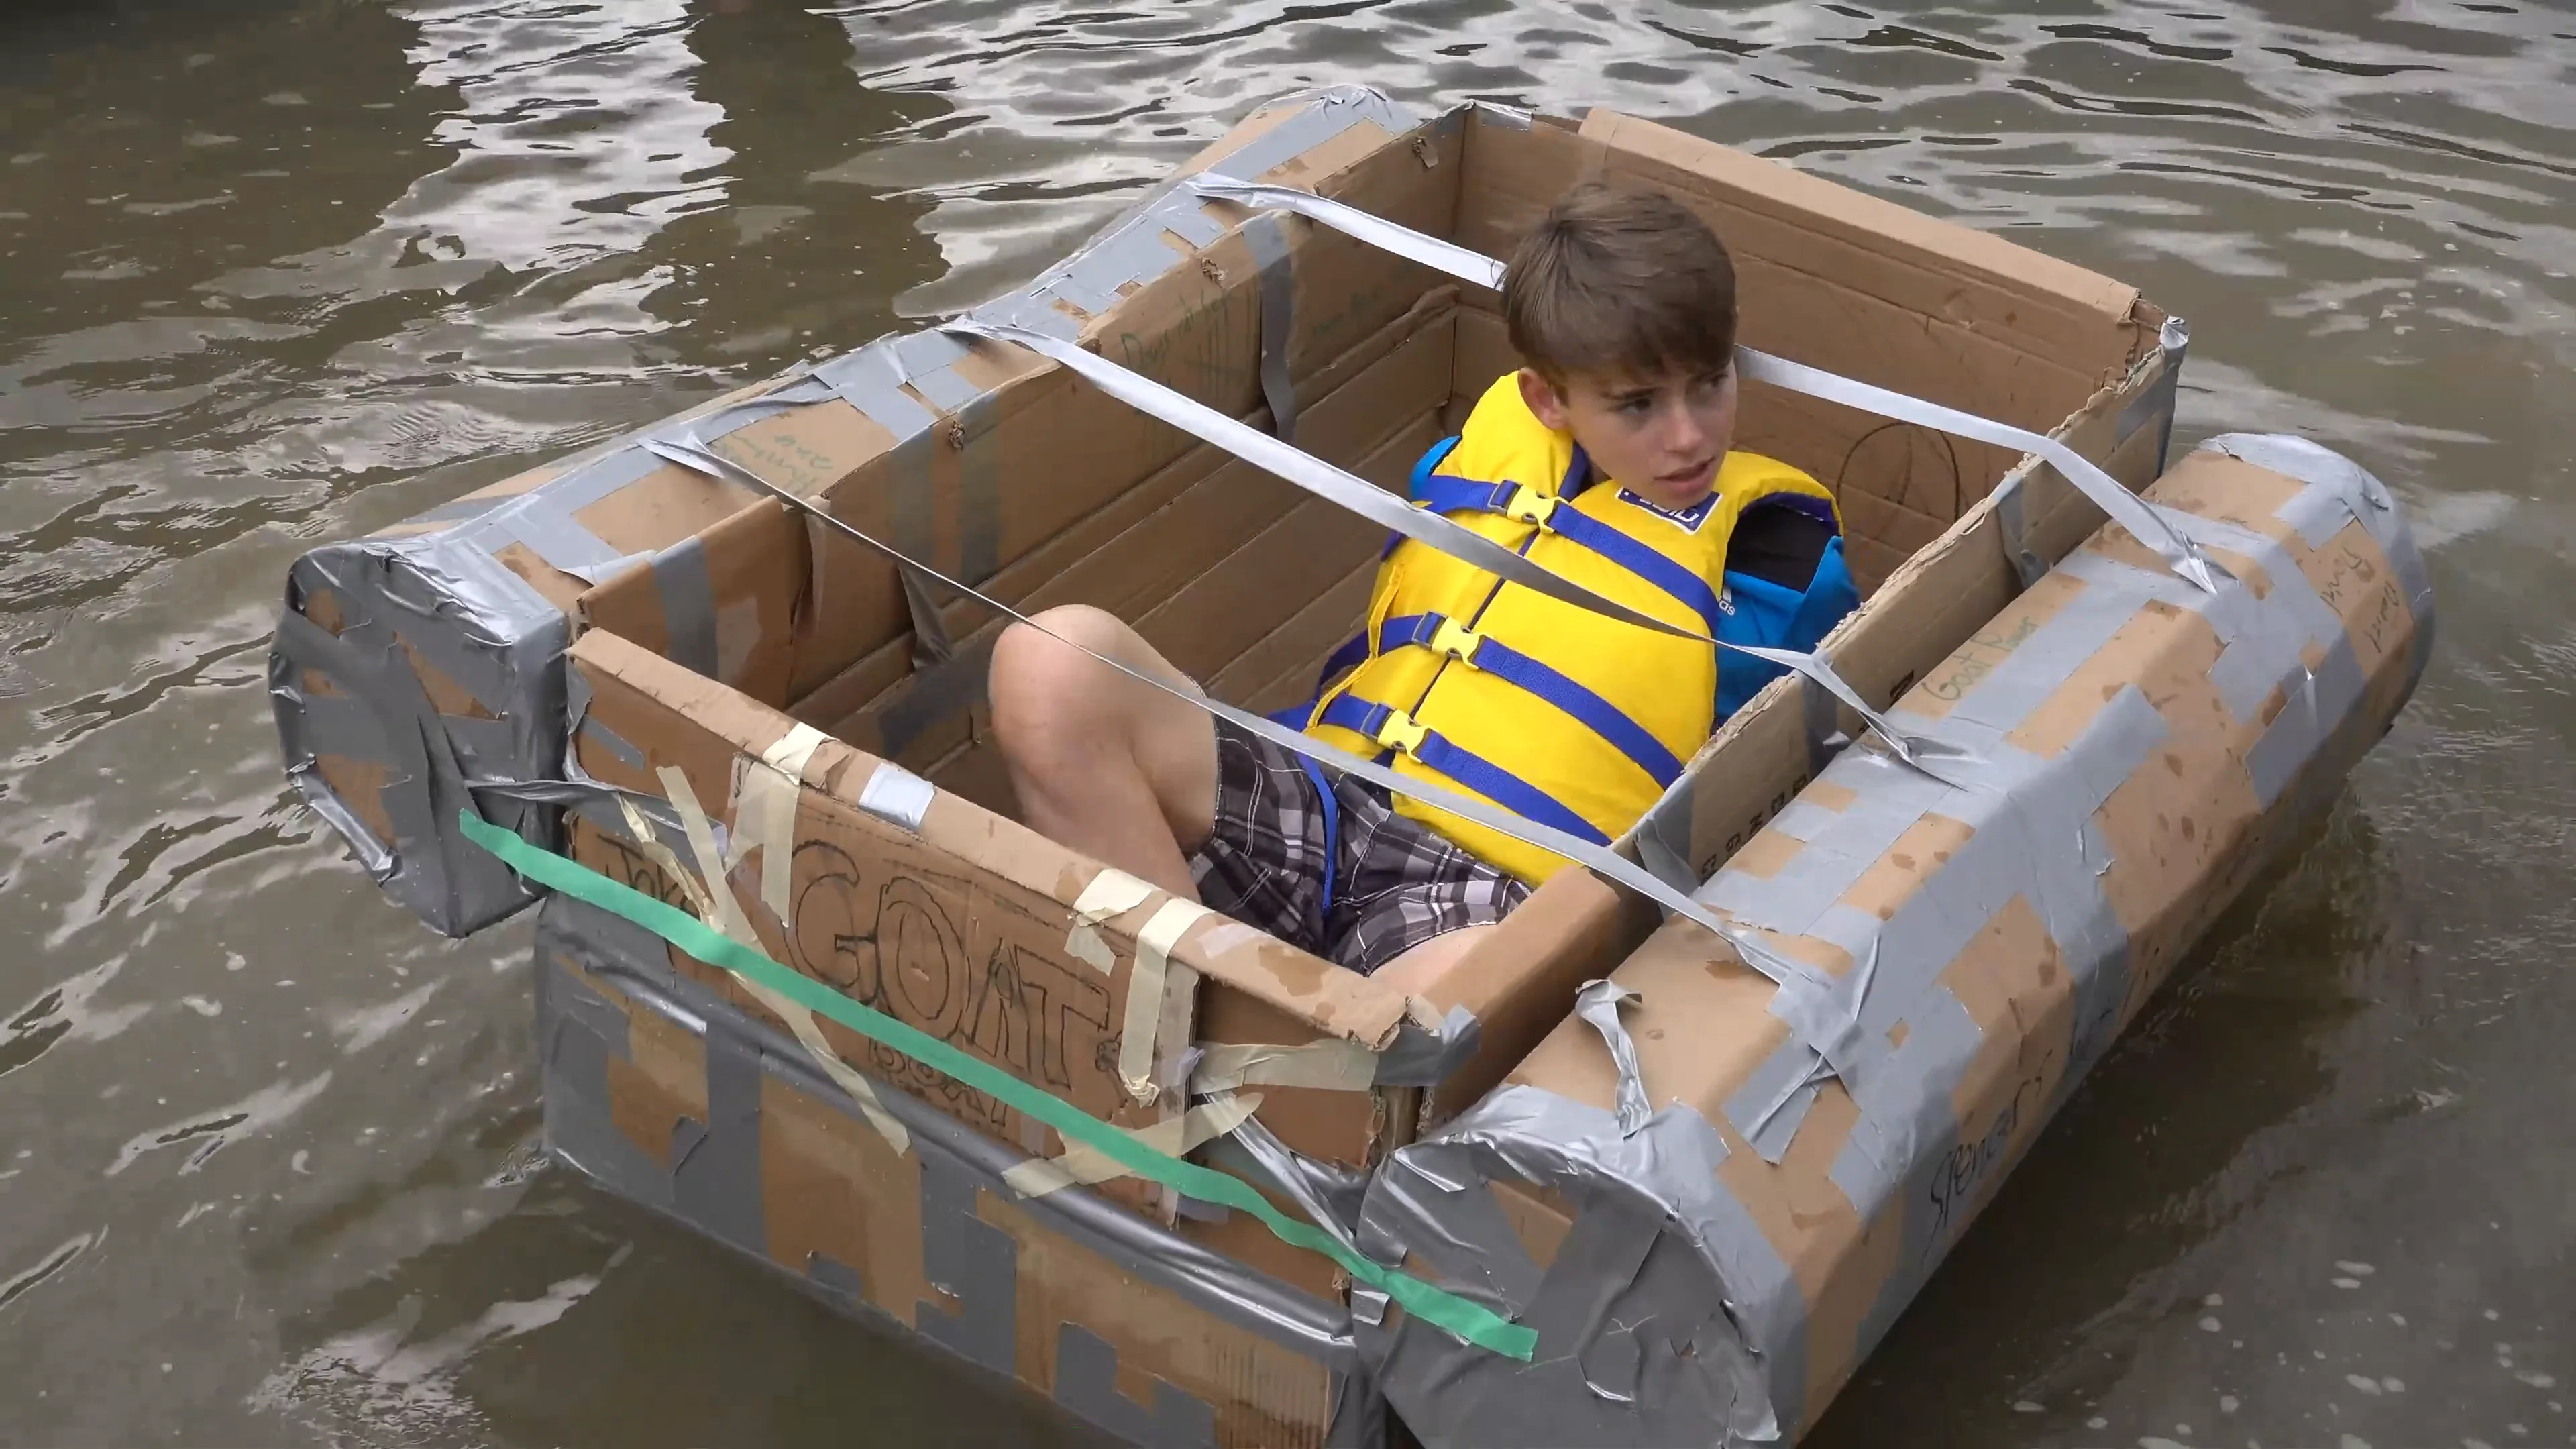 The Great Cardboard Boat Challenge on Vimeo